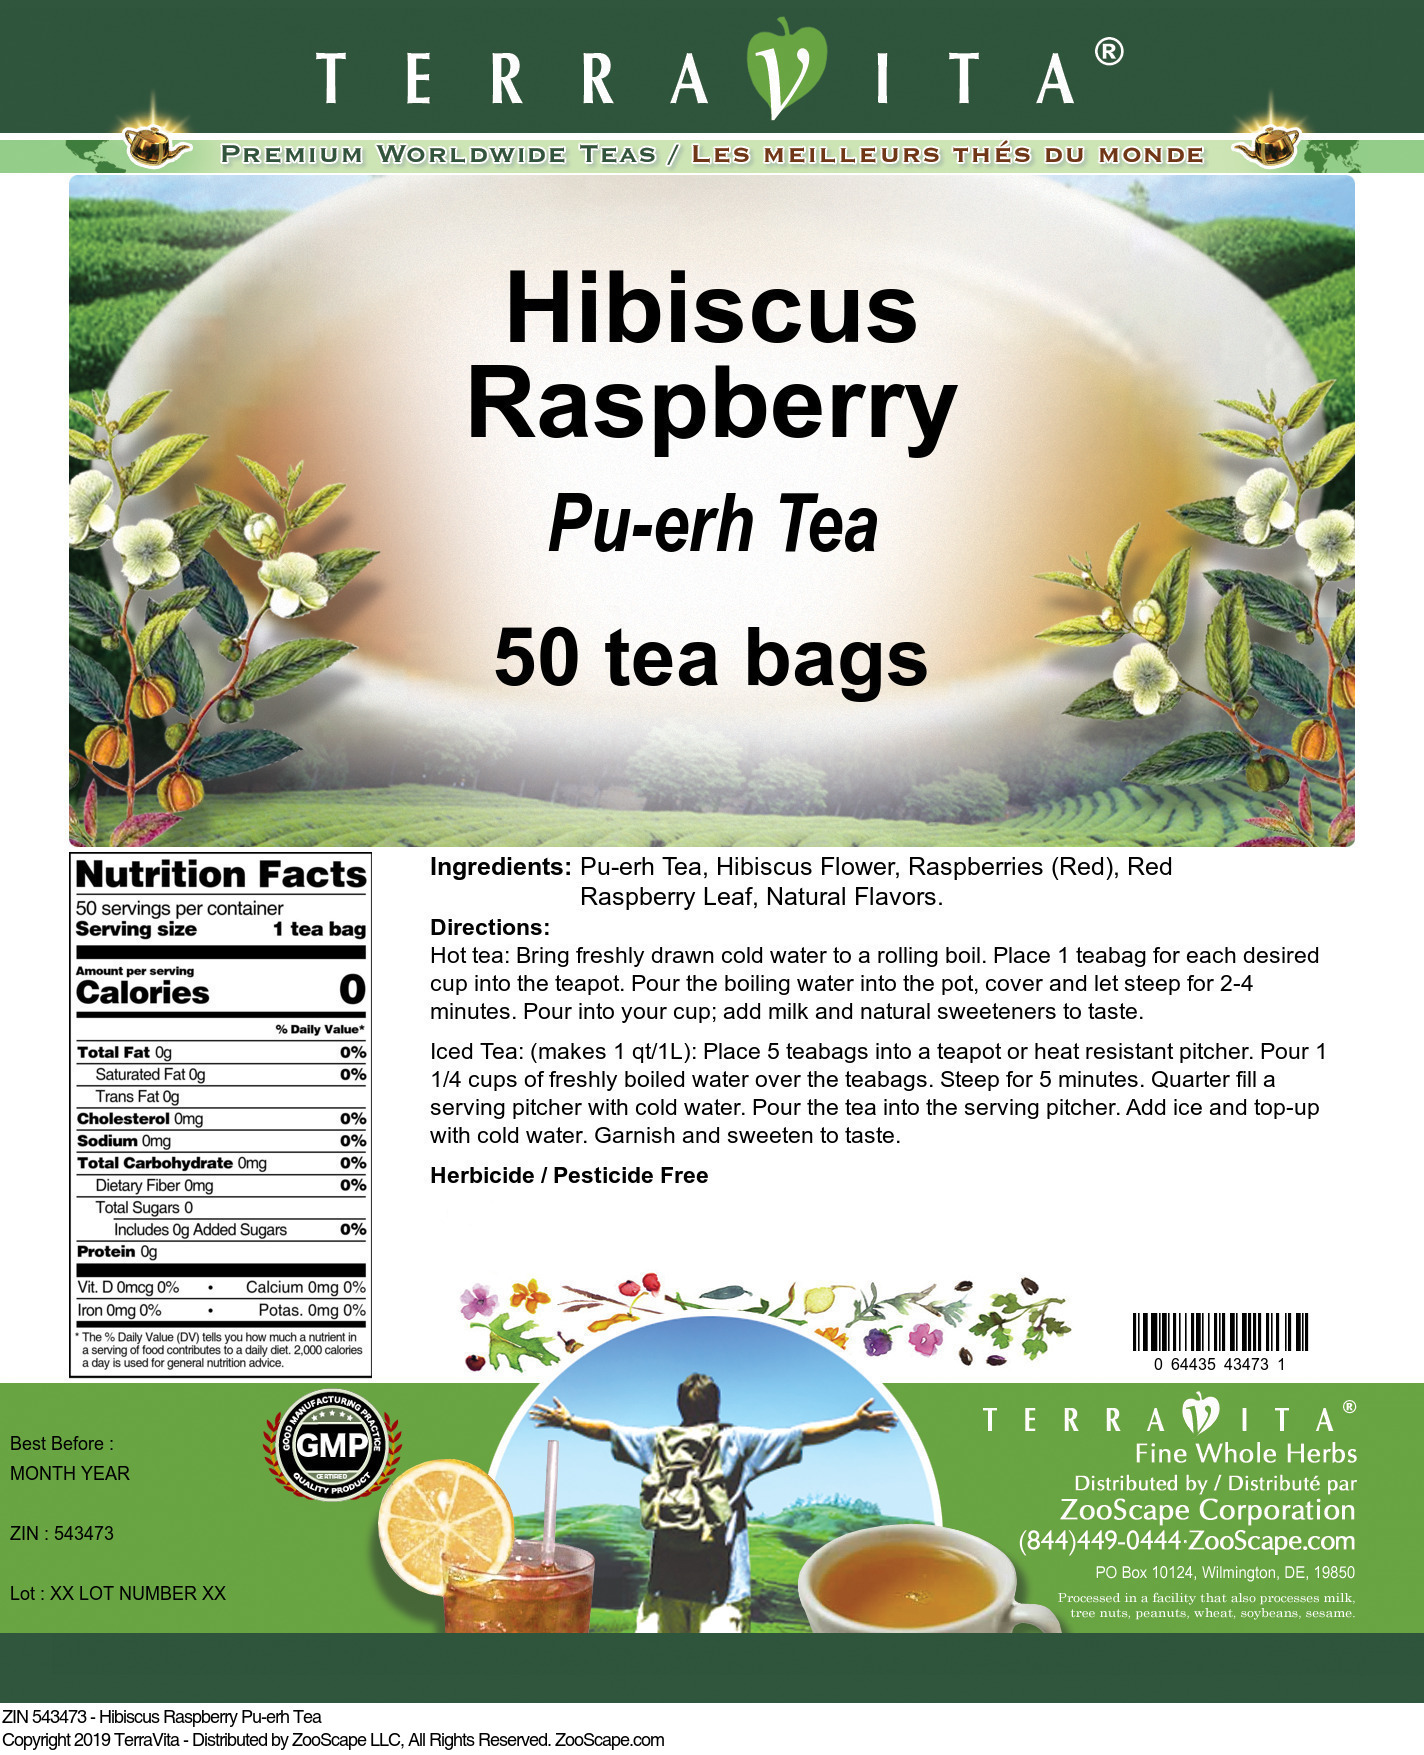 Hibiscus Raspberry Pu-erh Tea - Label